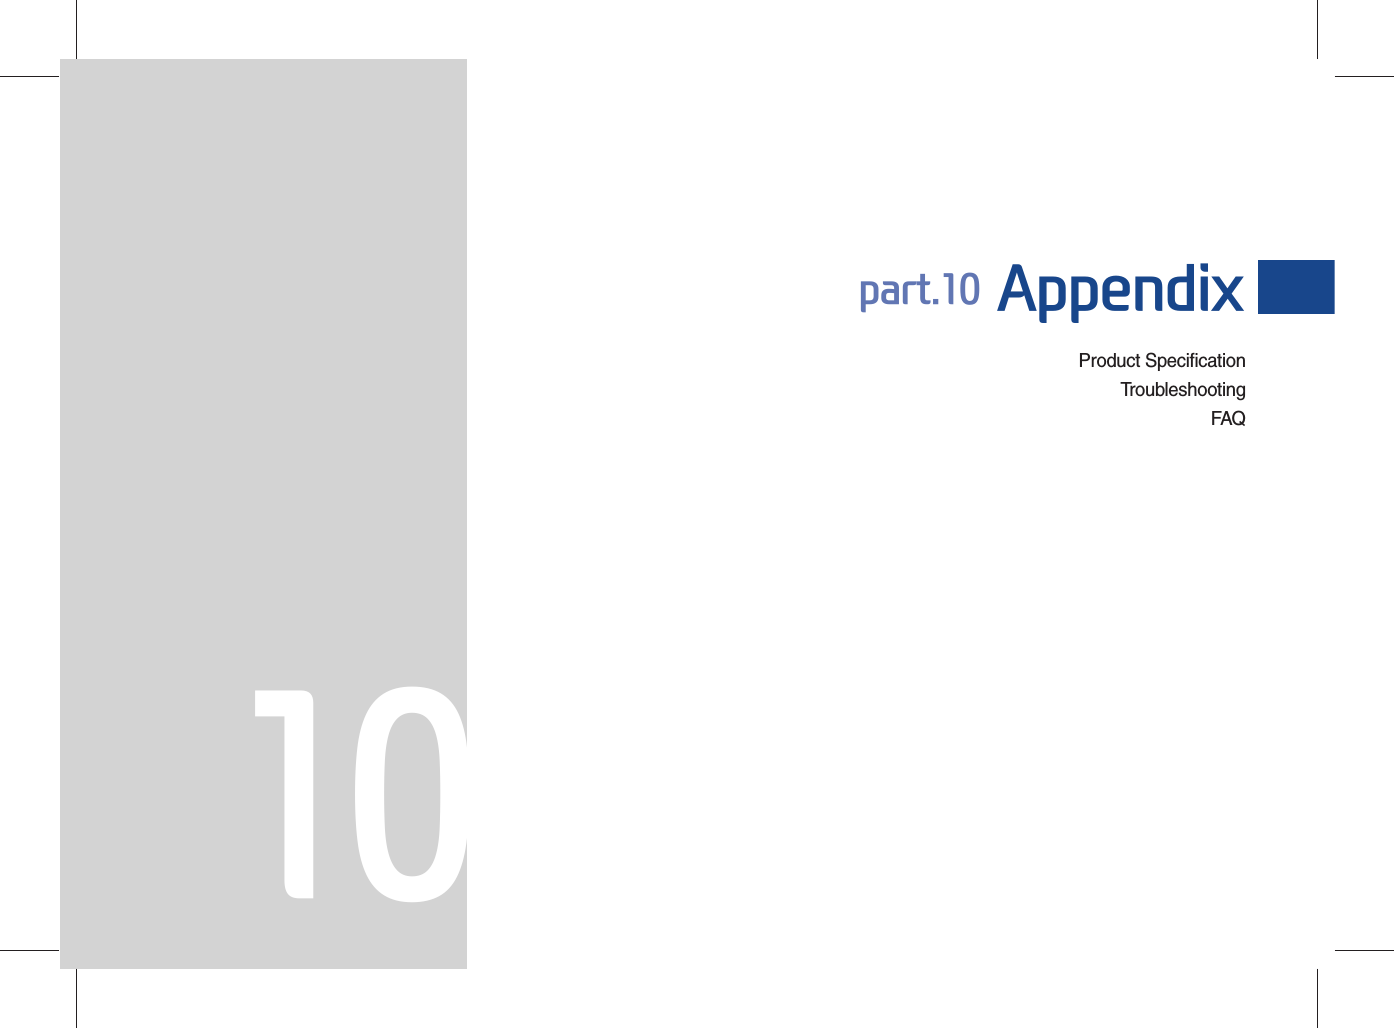 Product SpecificationTroubleshootingFAQpart.10 Appendix10